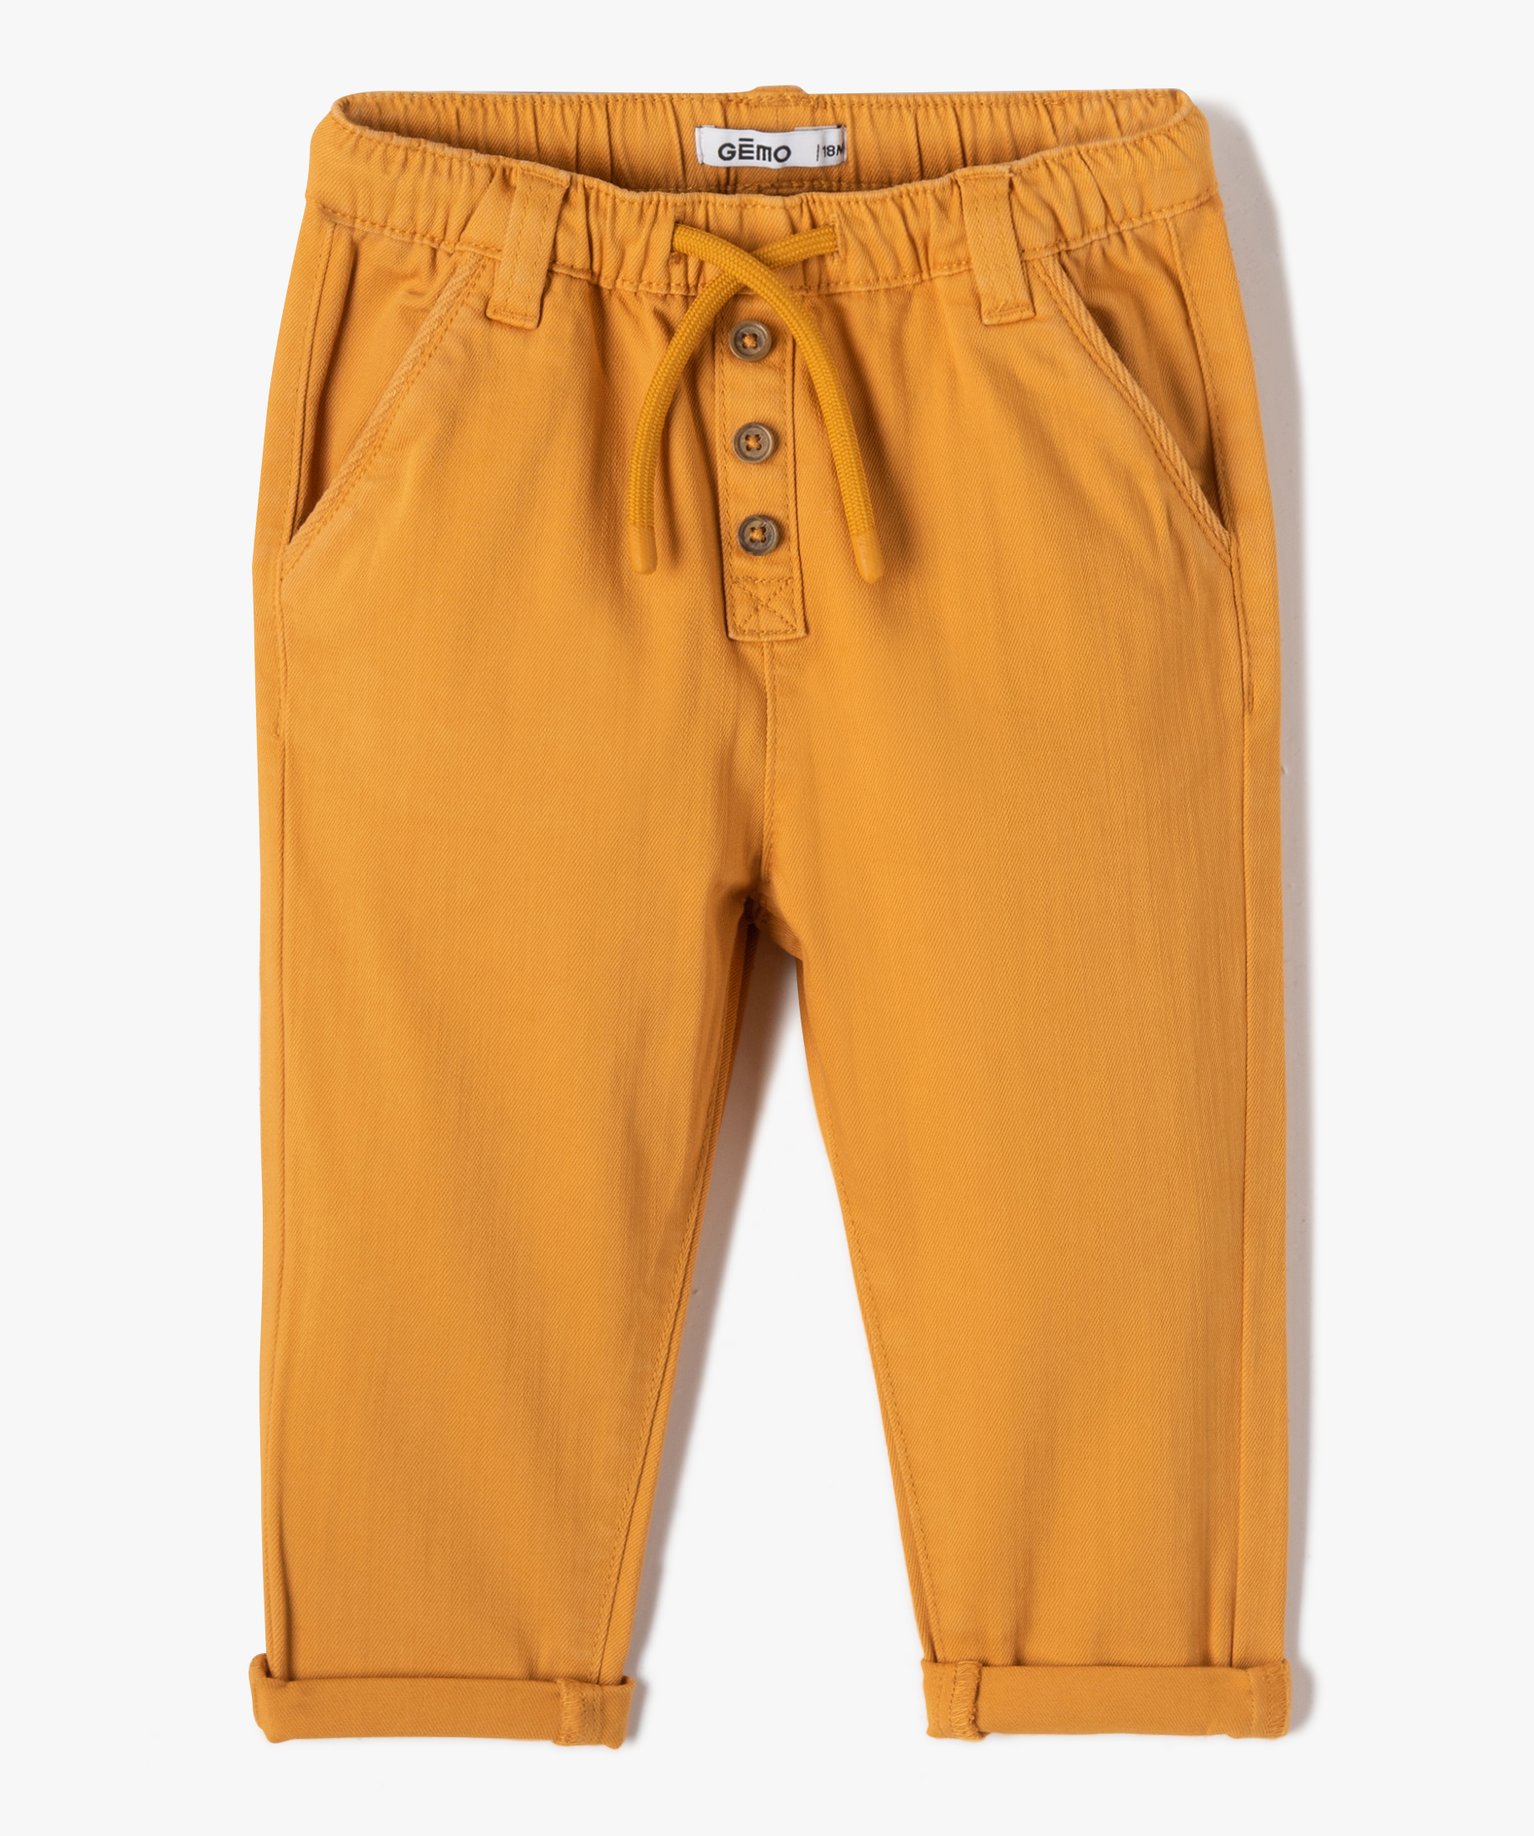 pantalon bebe garcon en denim colore orange